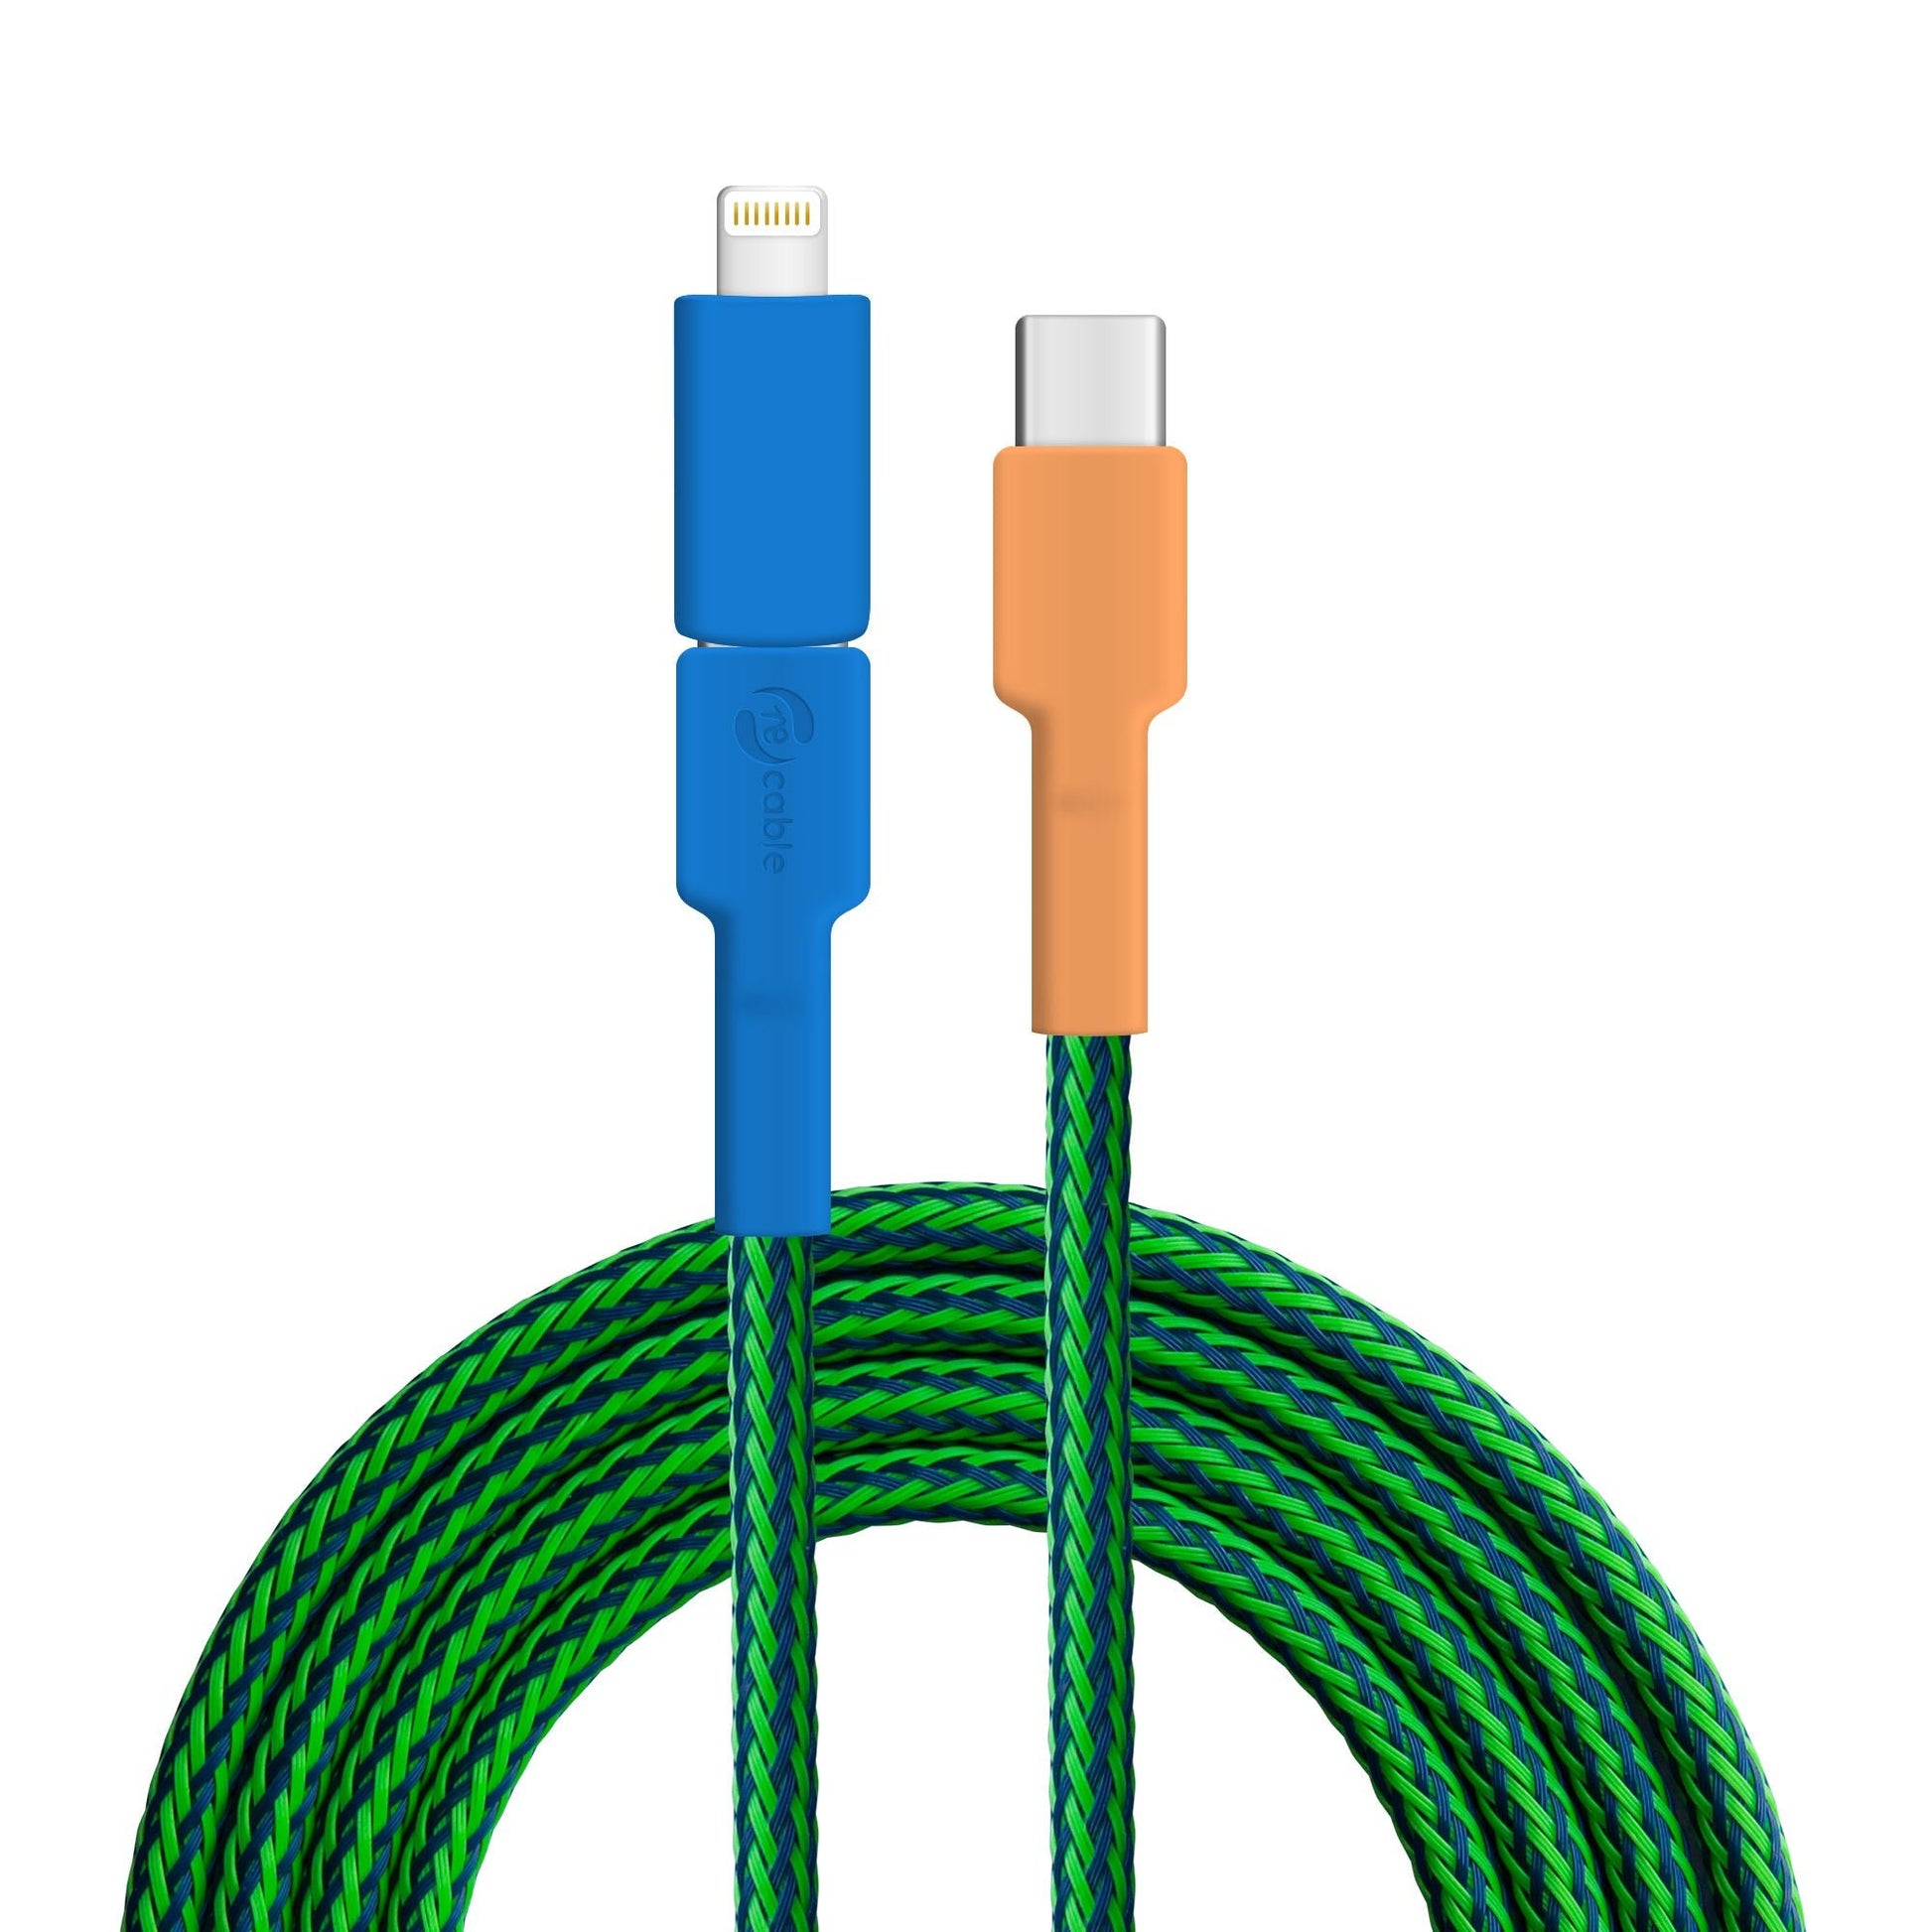 USB-Kabel, Design: Pfau, Anschlüsse: USB C auf USB C mit Lightning Adapter (verbunden)